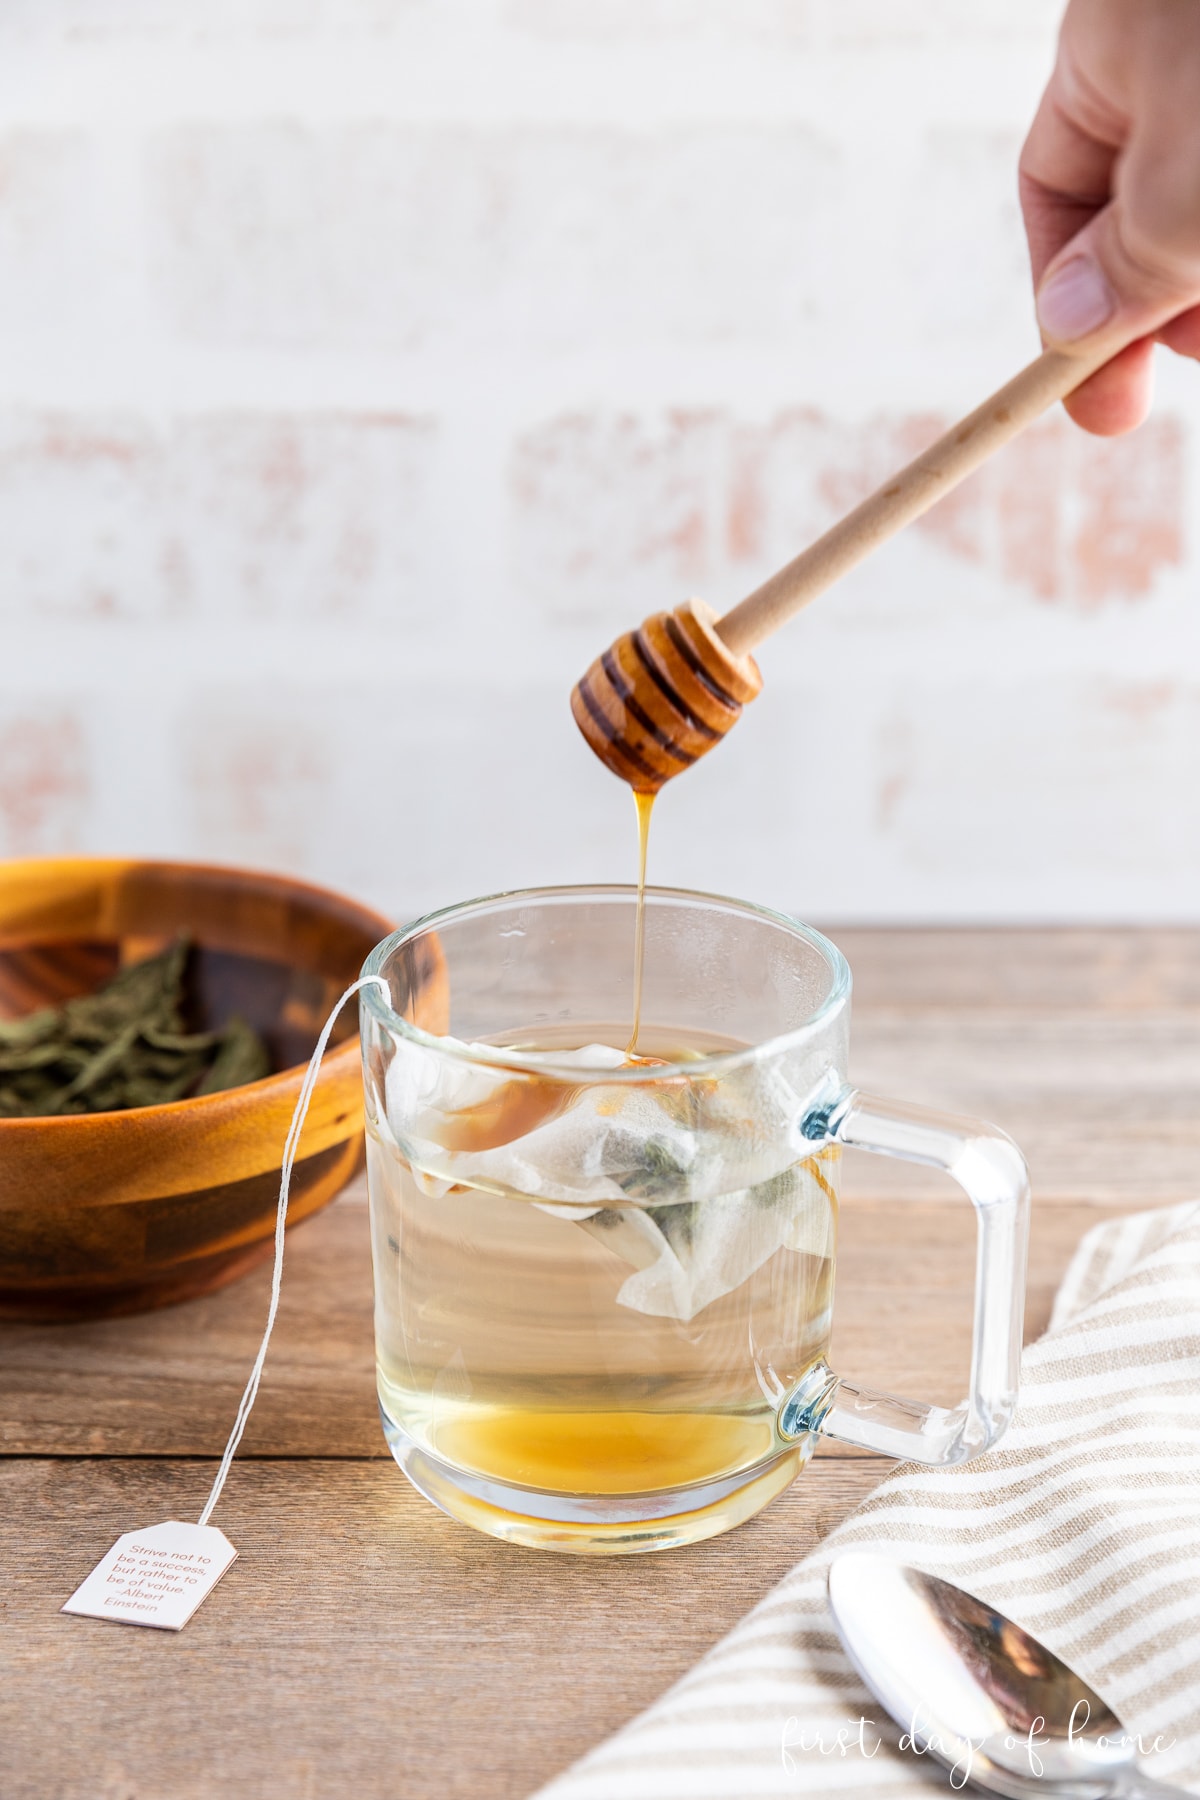 Honey dipper dripping honey into mug with homemade herbal tea